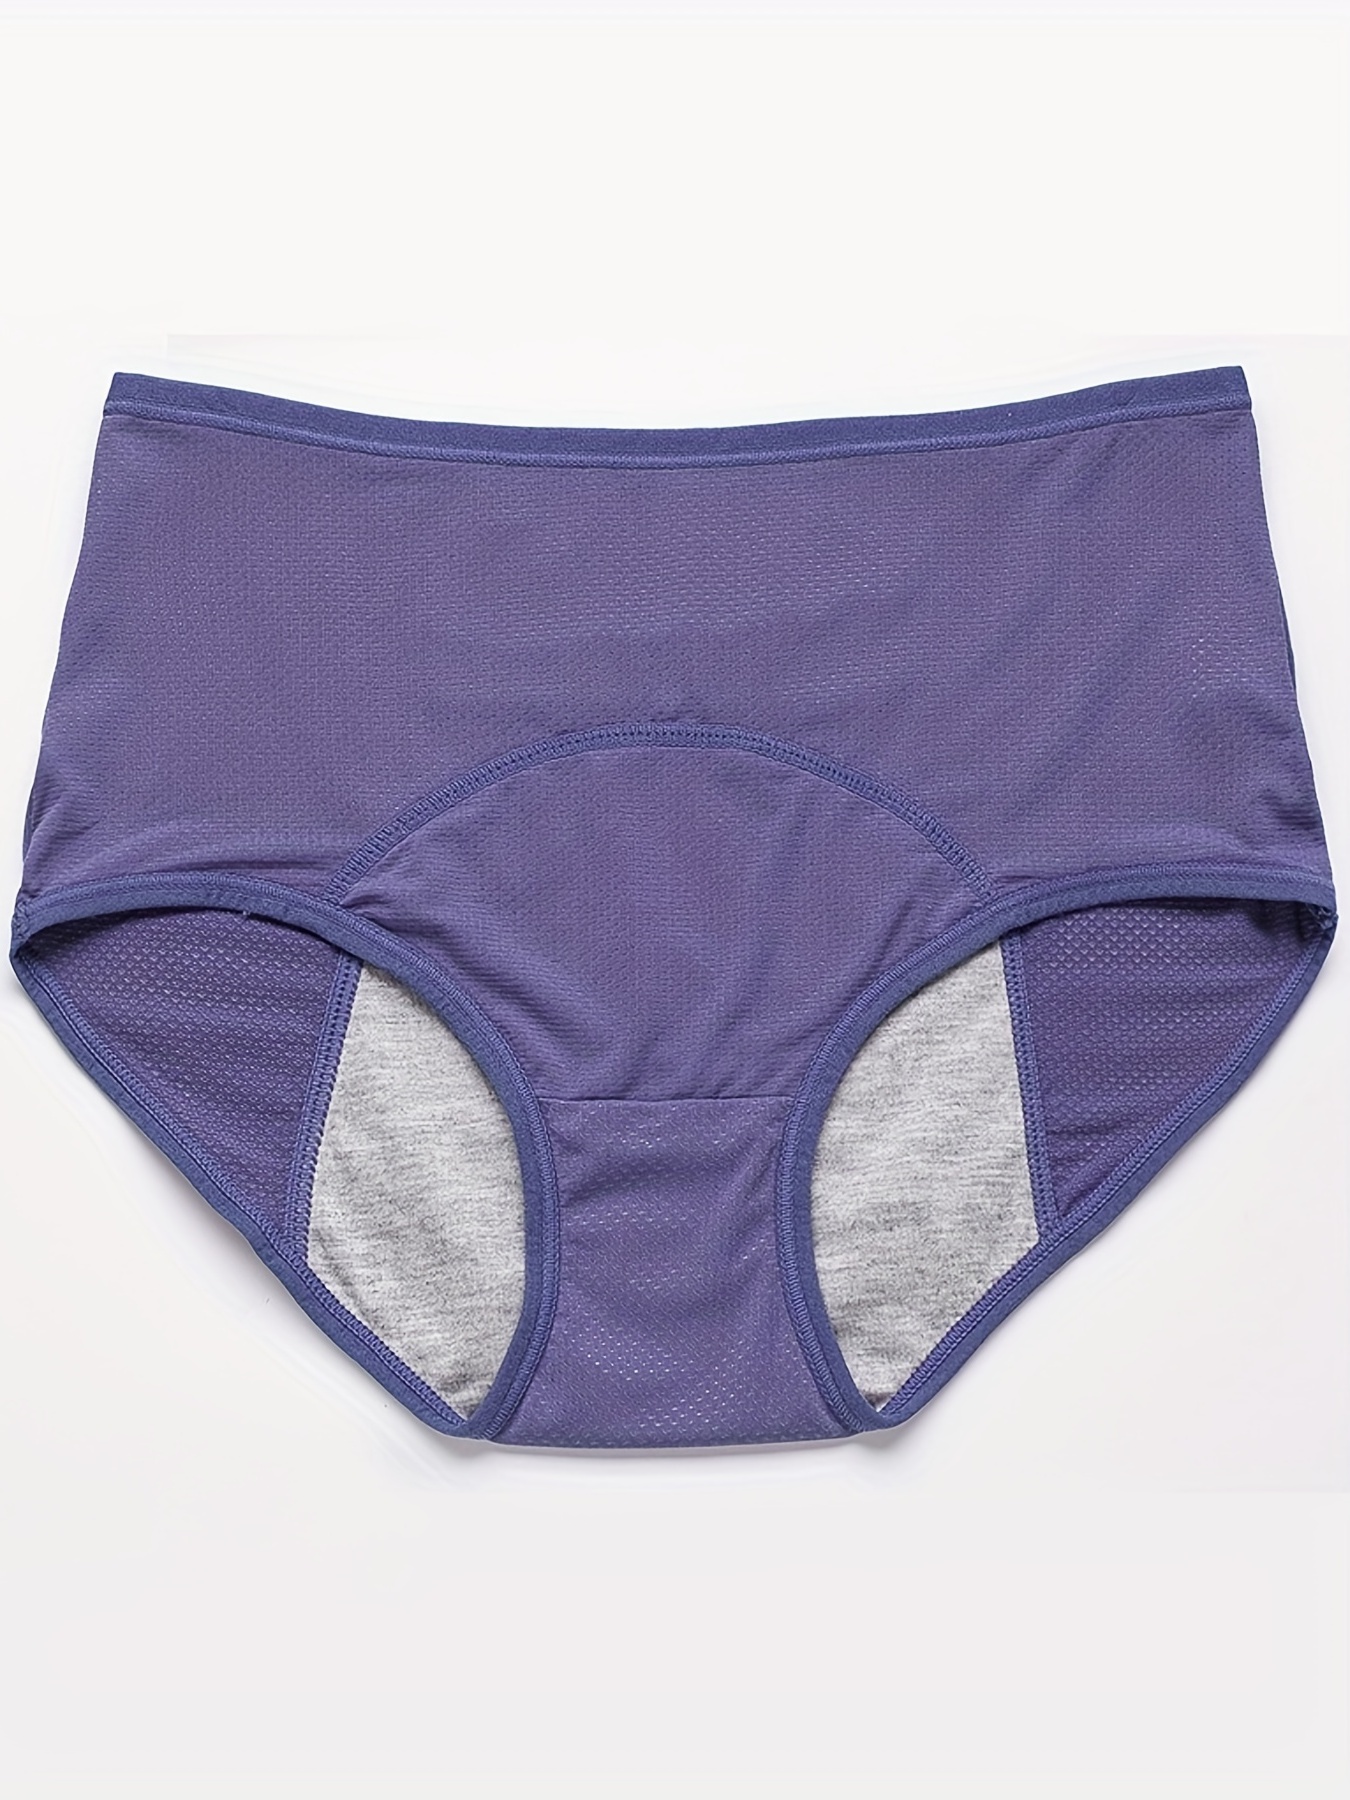 3 Pieces/Set Menstrual Period Underwear Women Period Panties - Buy